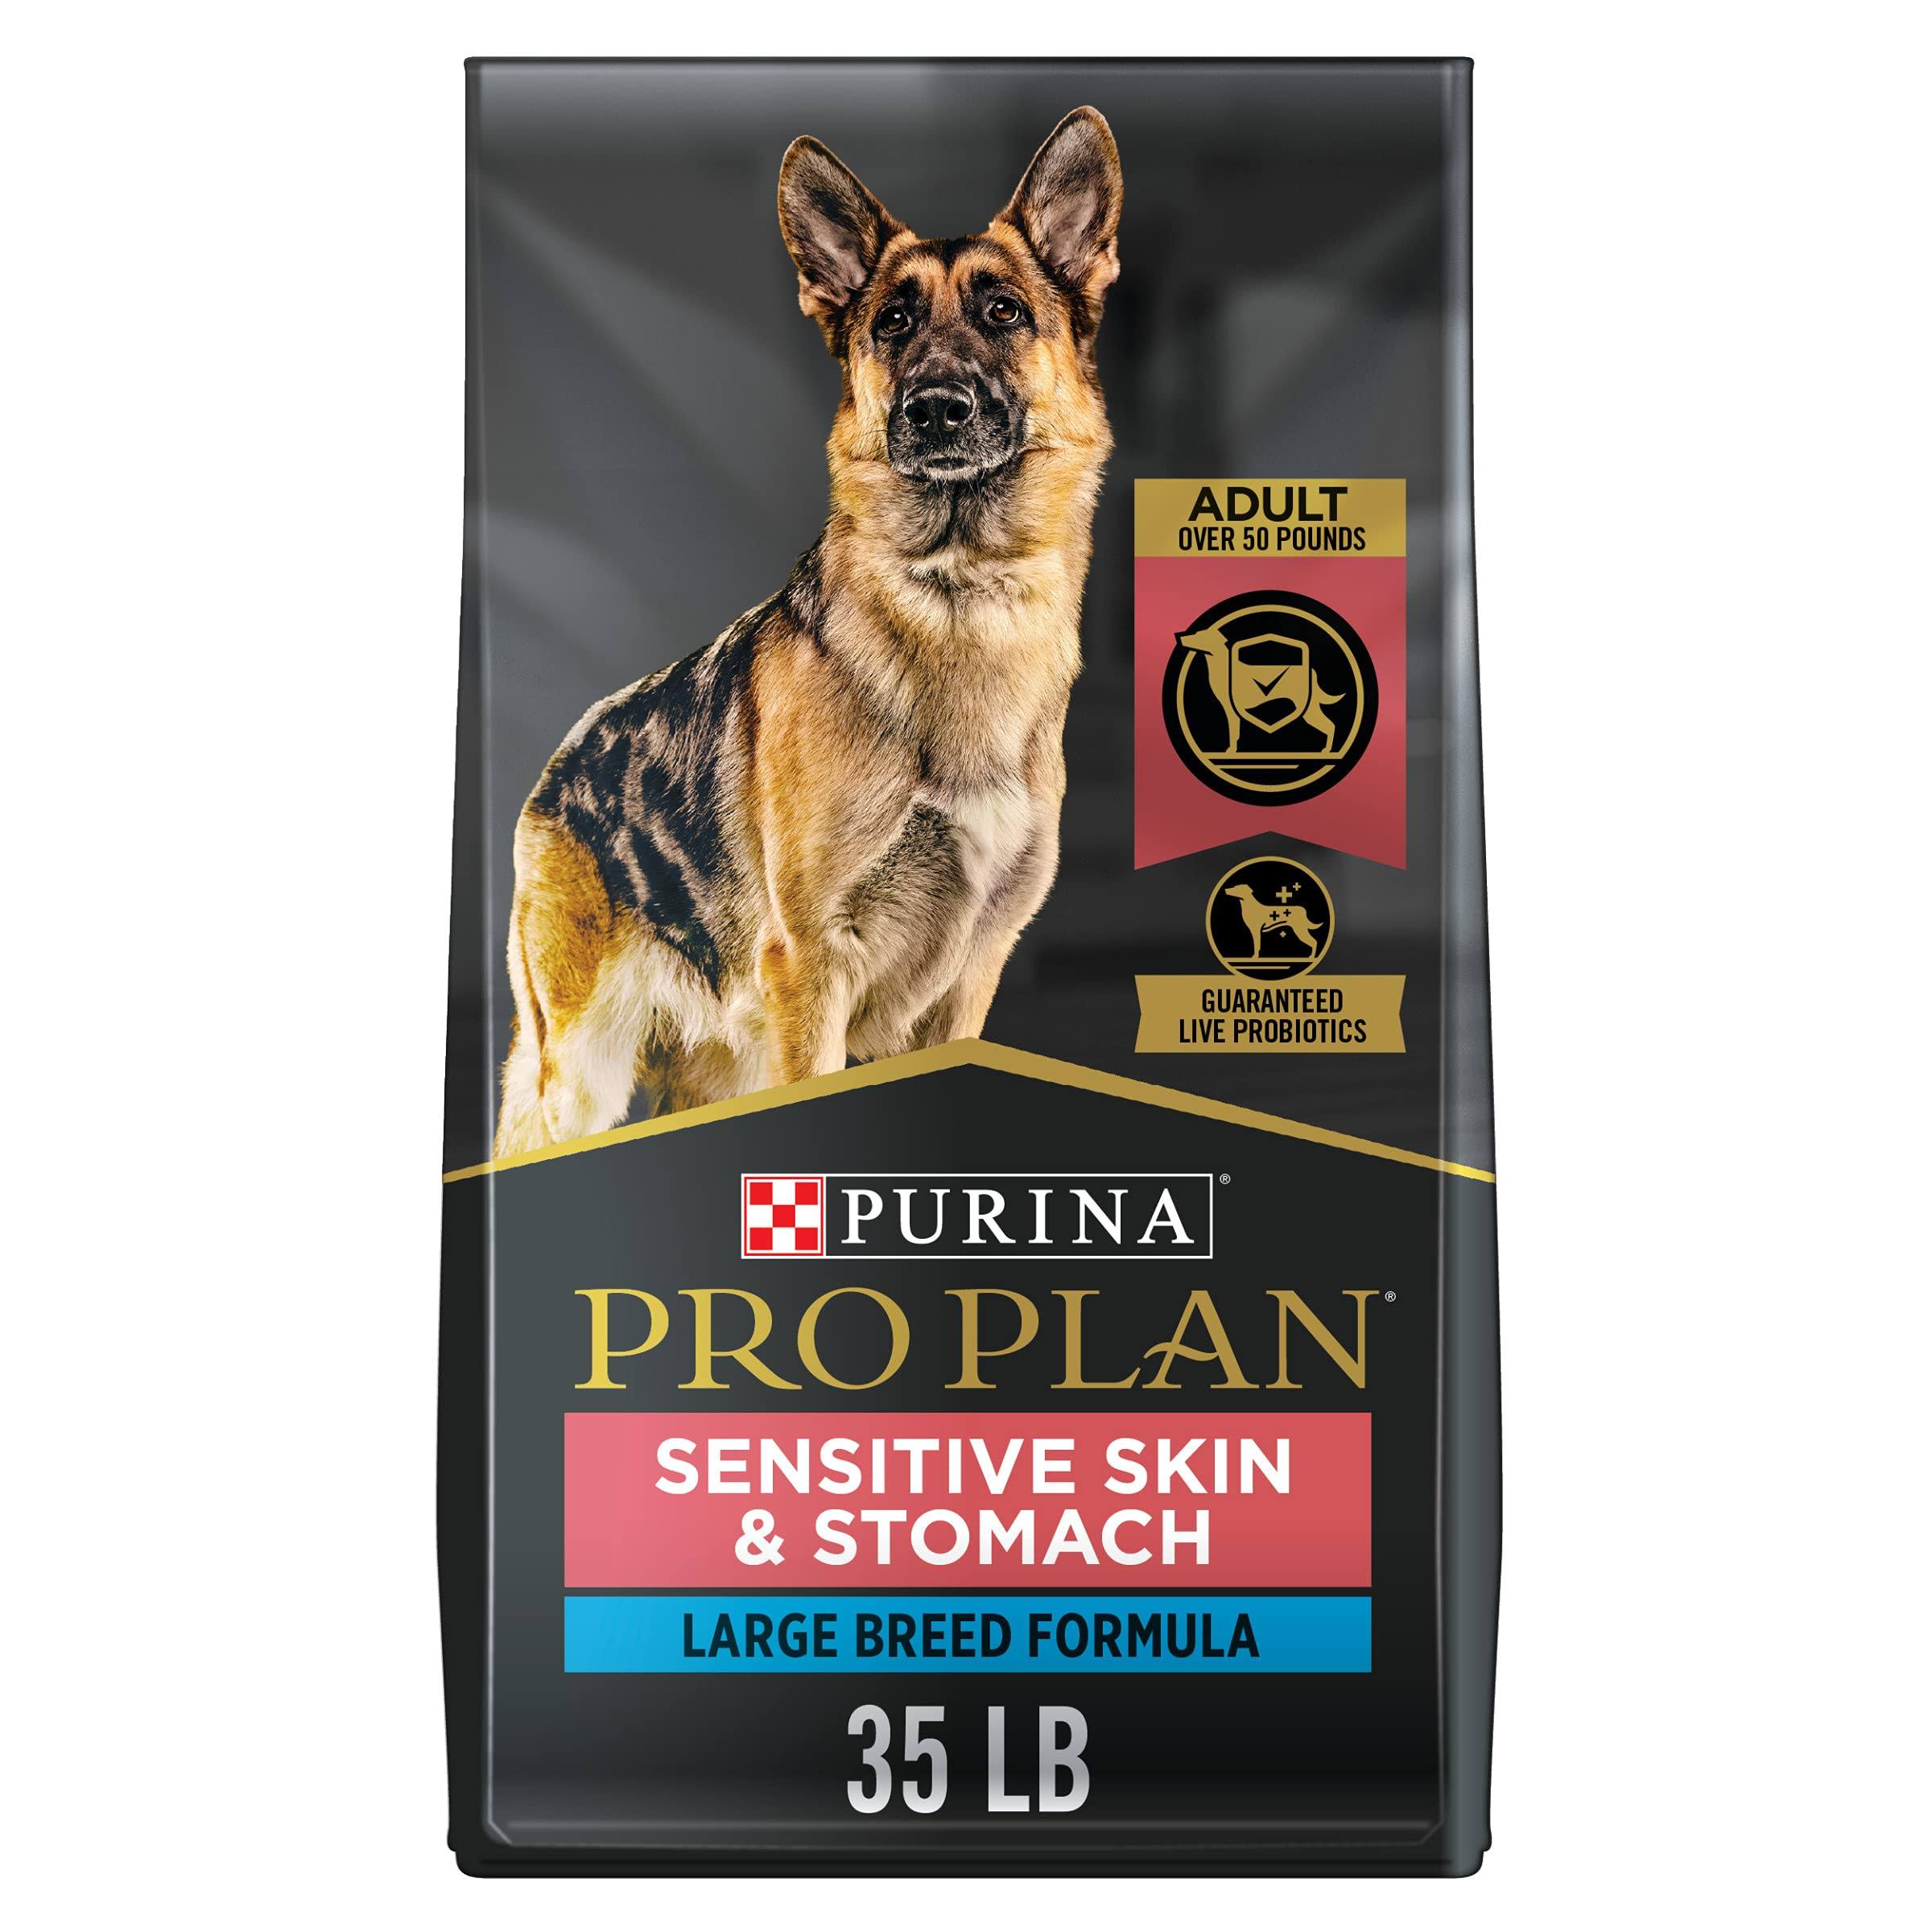 Purina Pro Plan Adult Large Breed Sensitive Skin & Stomach Salmon & Rice Formula Dry Dog Food 35 LB